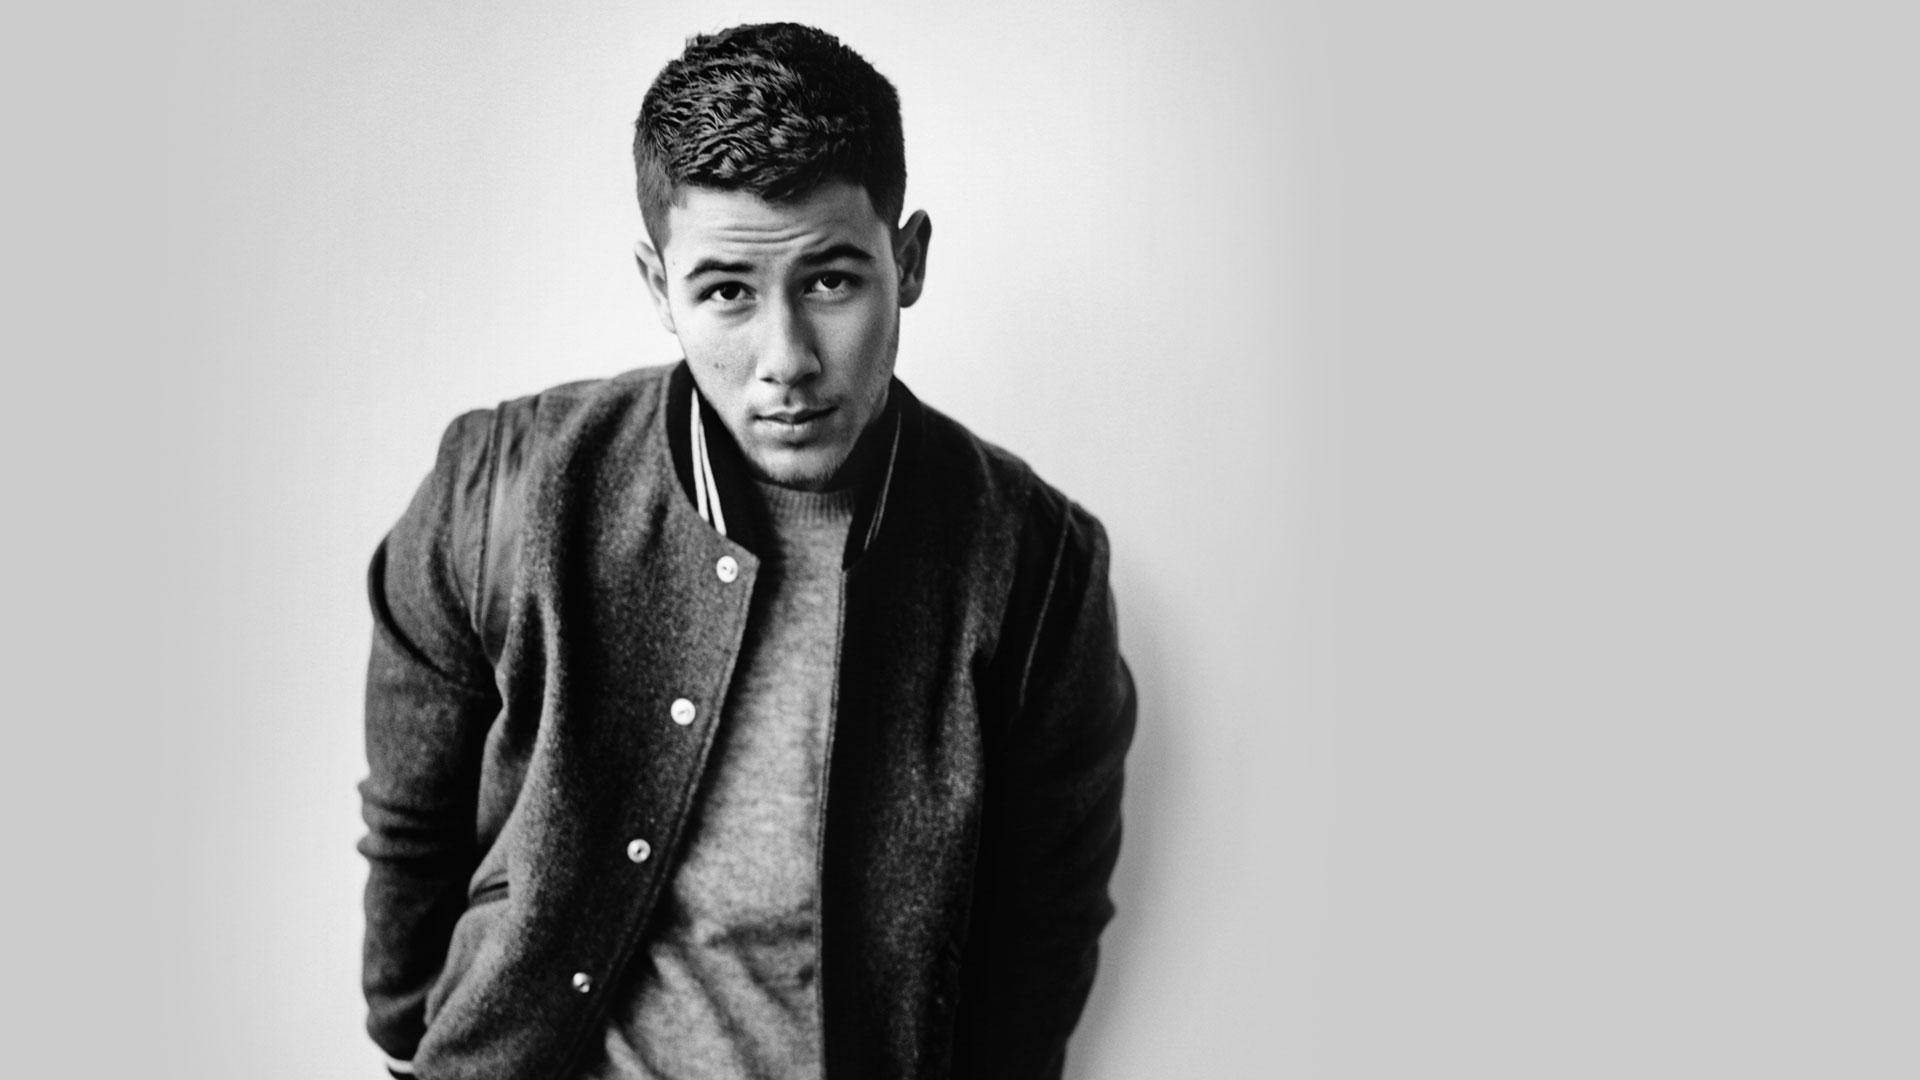 Wallpaper Monochrome, Nick Jonas, celebrity